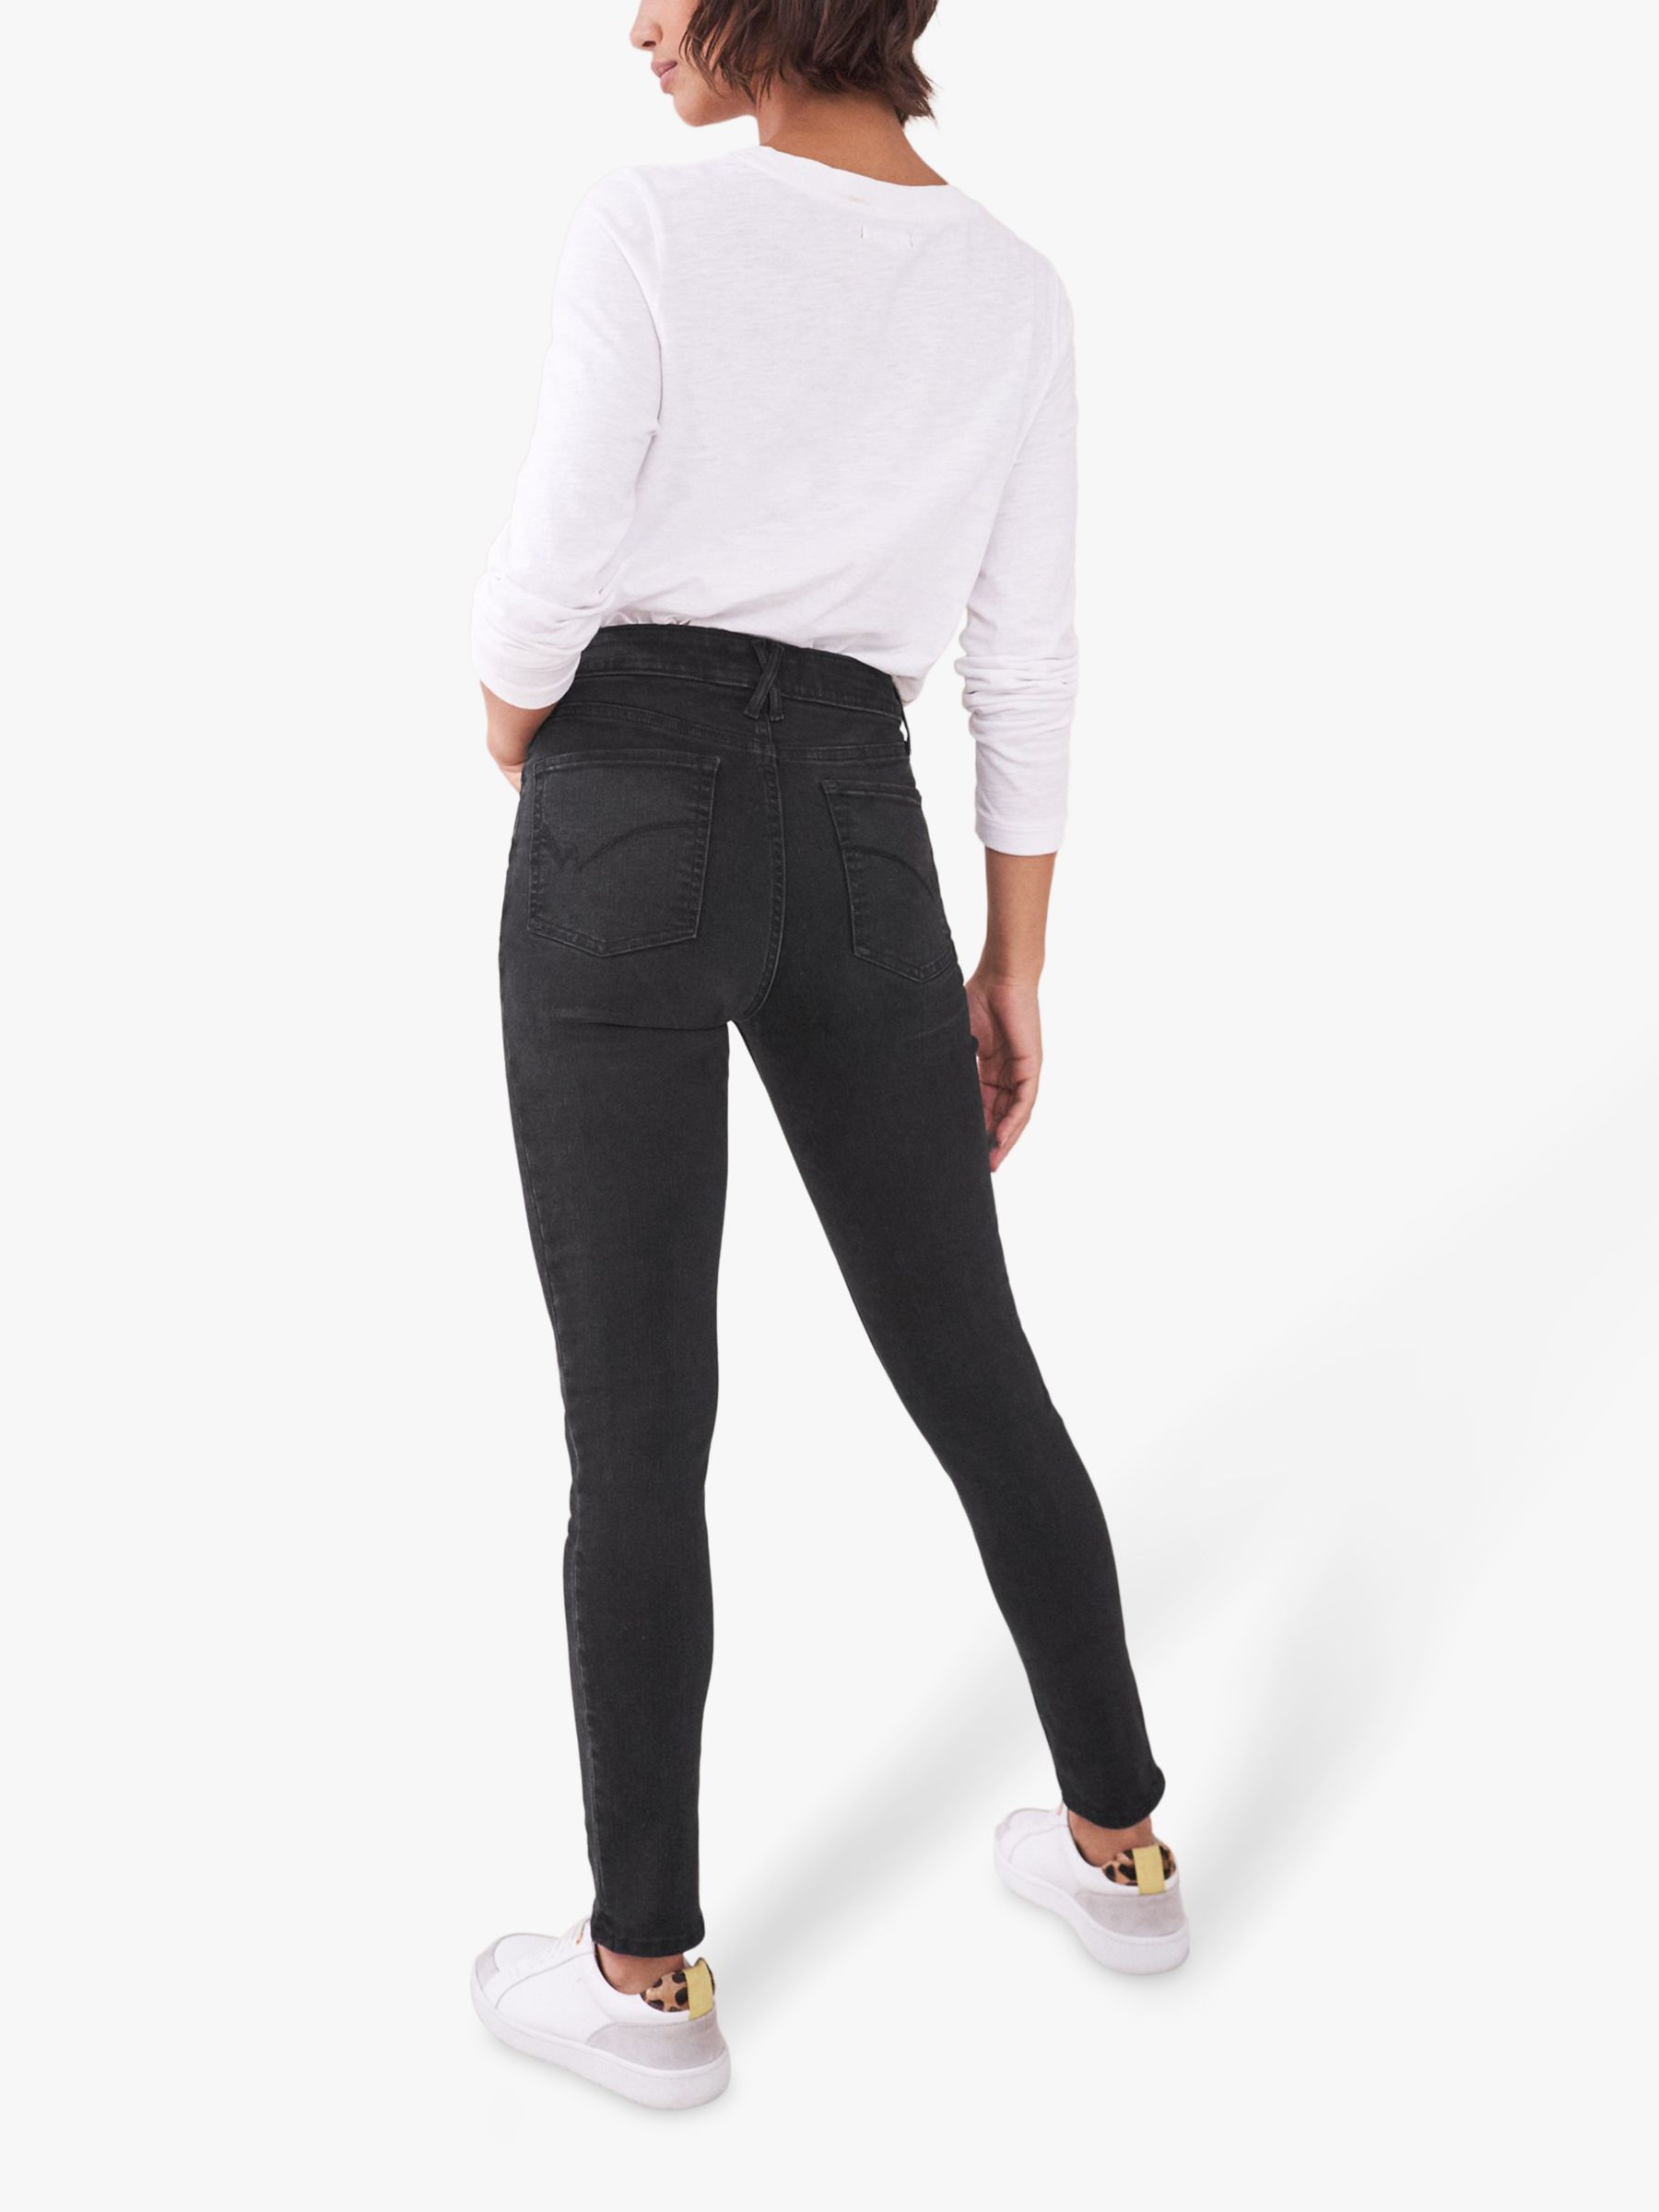 White Stuff Amelia Skinny Jeans, Black, 6S